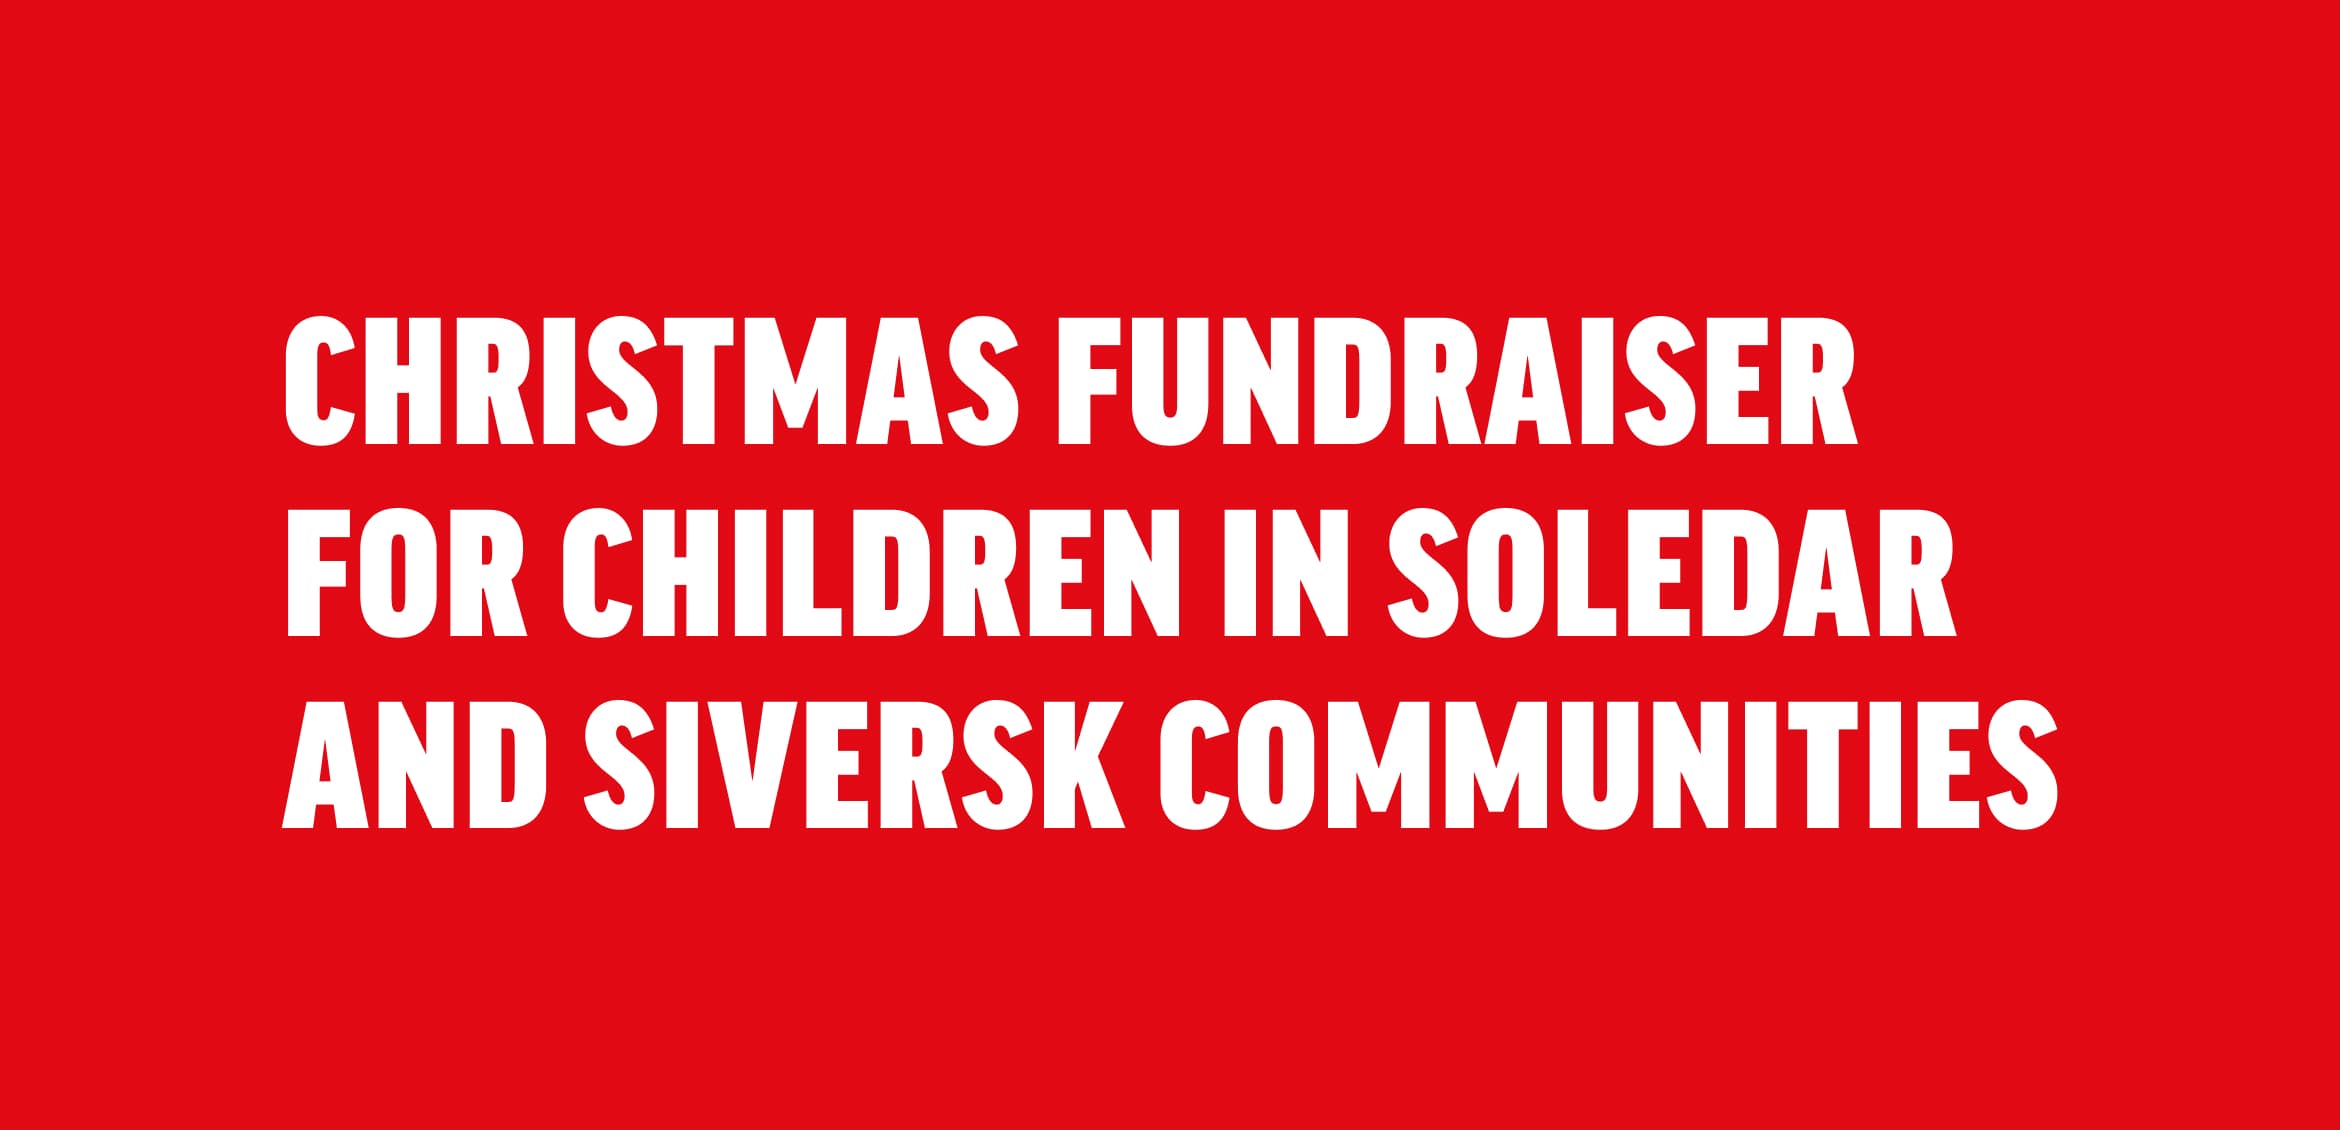 Christmas fundraiser for children in Soledar and Siversk communities.